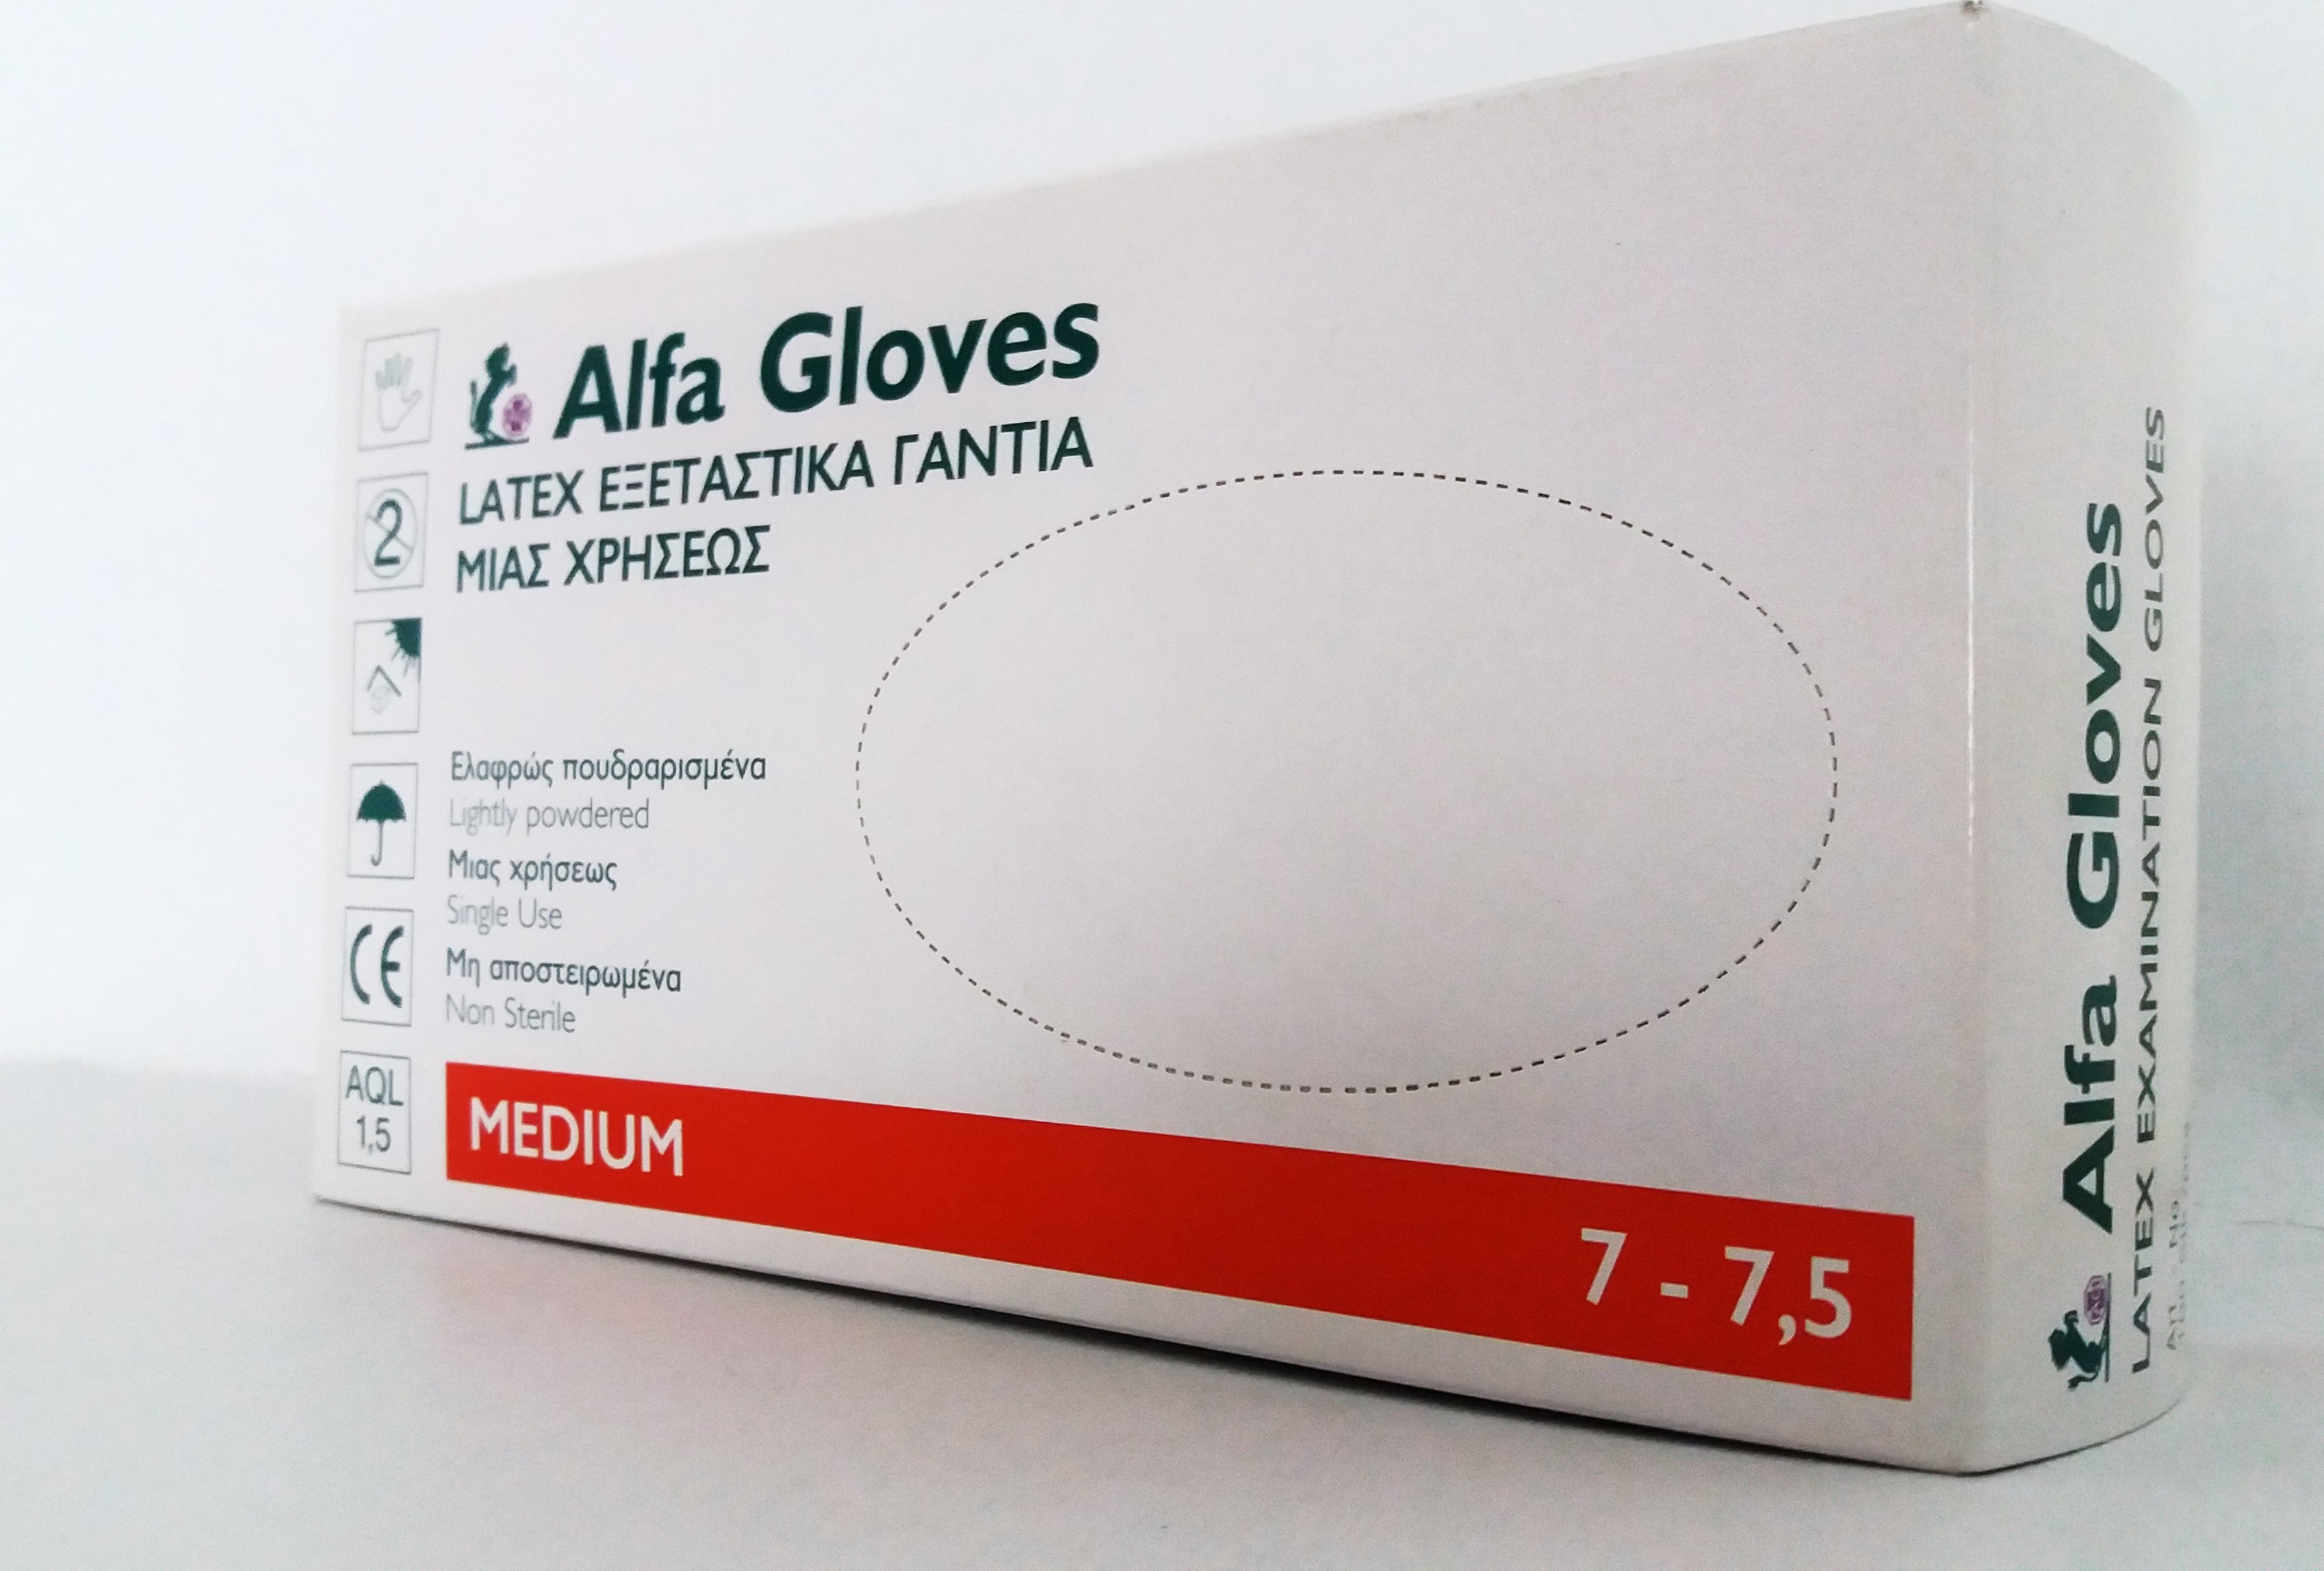 Examination gloves Alfa Gloves powdered, Medium